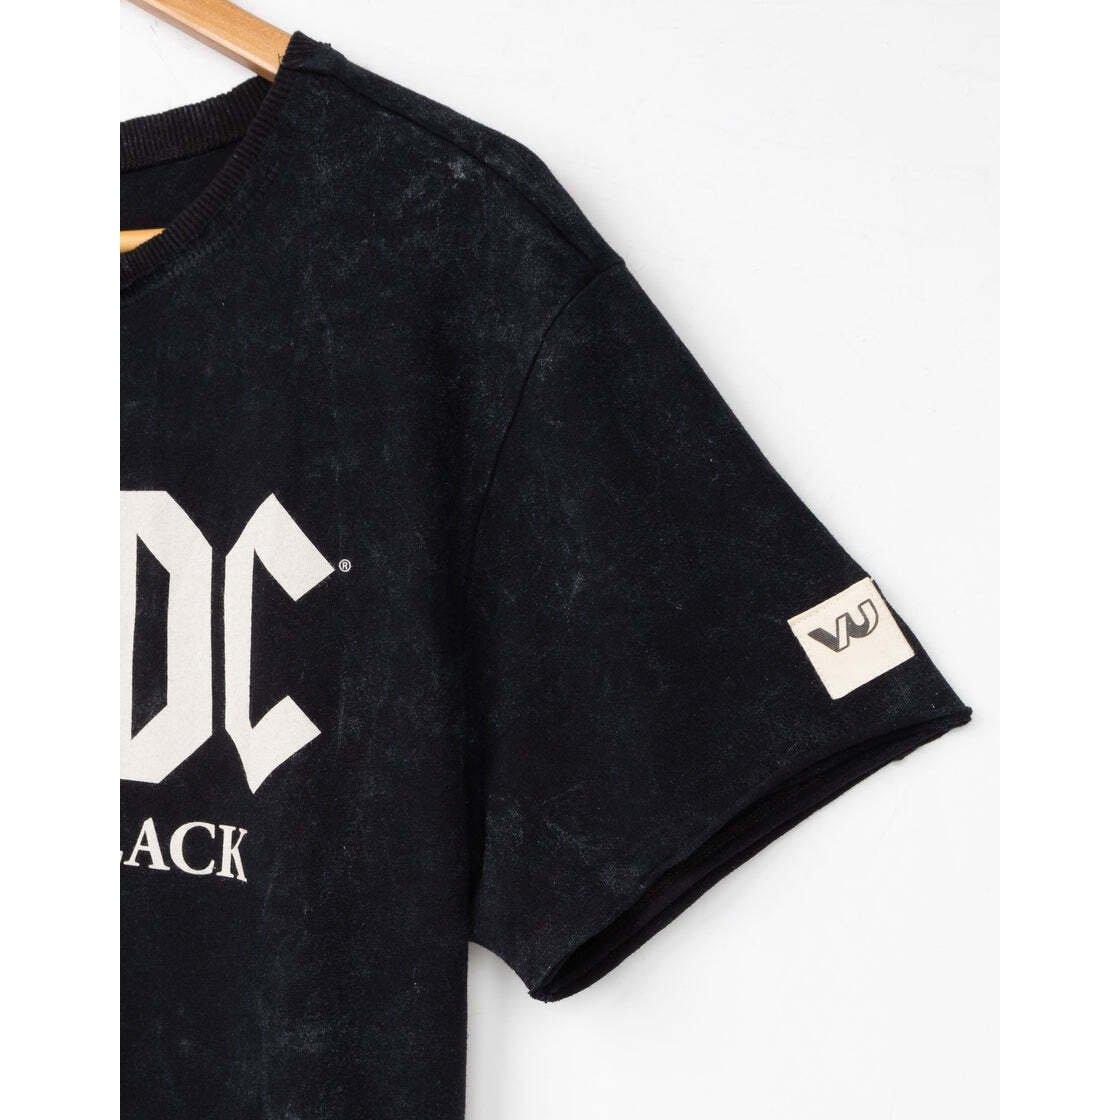 AC/DC  ACDC Back In Black TShirt 